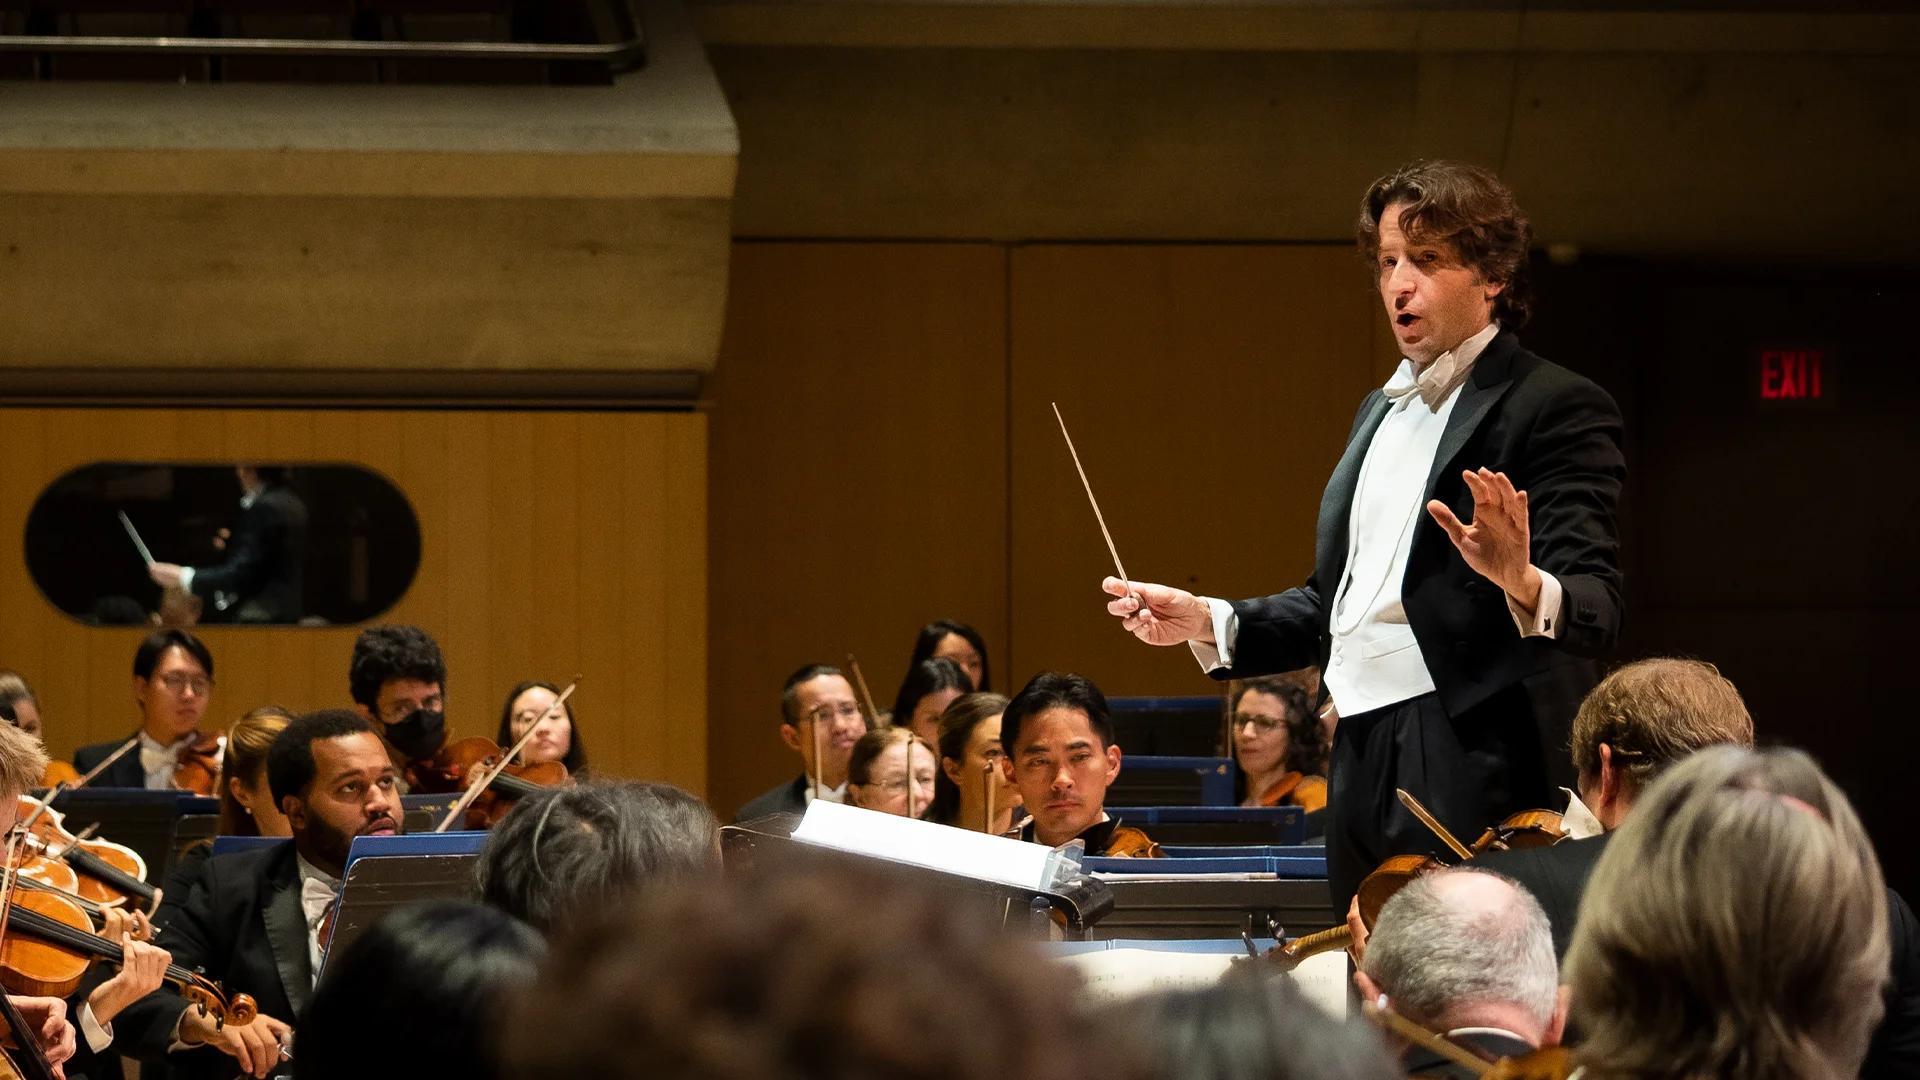 Toronto Symphony lands record deal